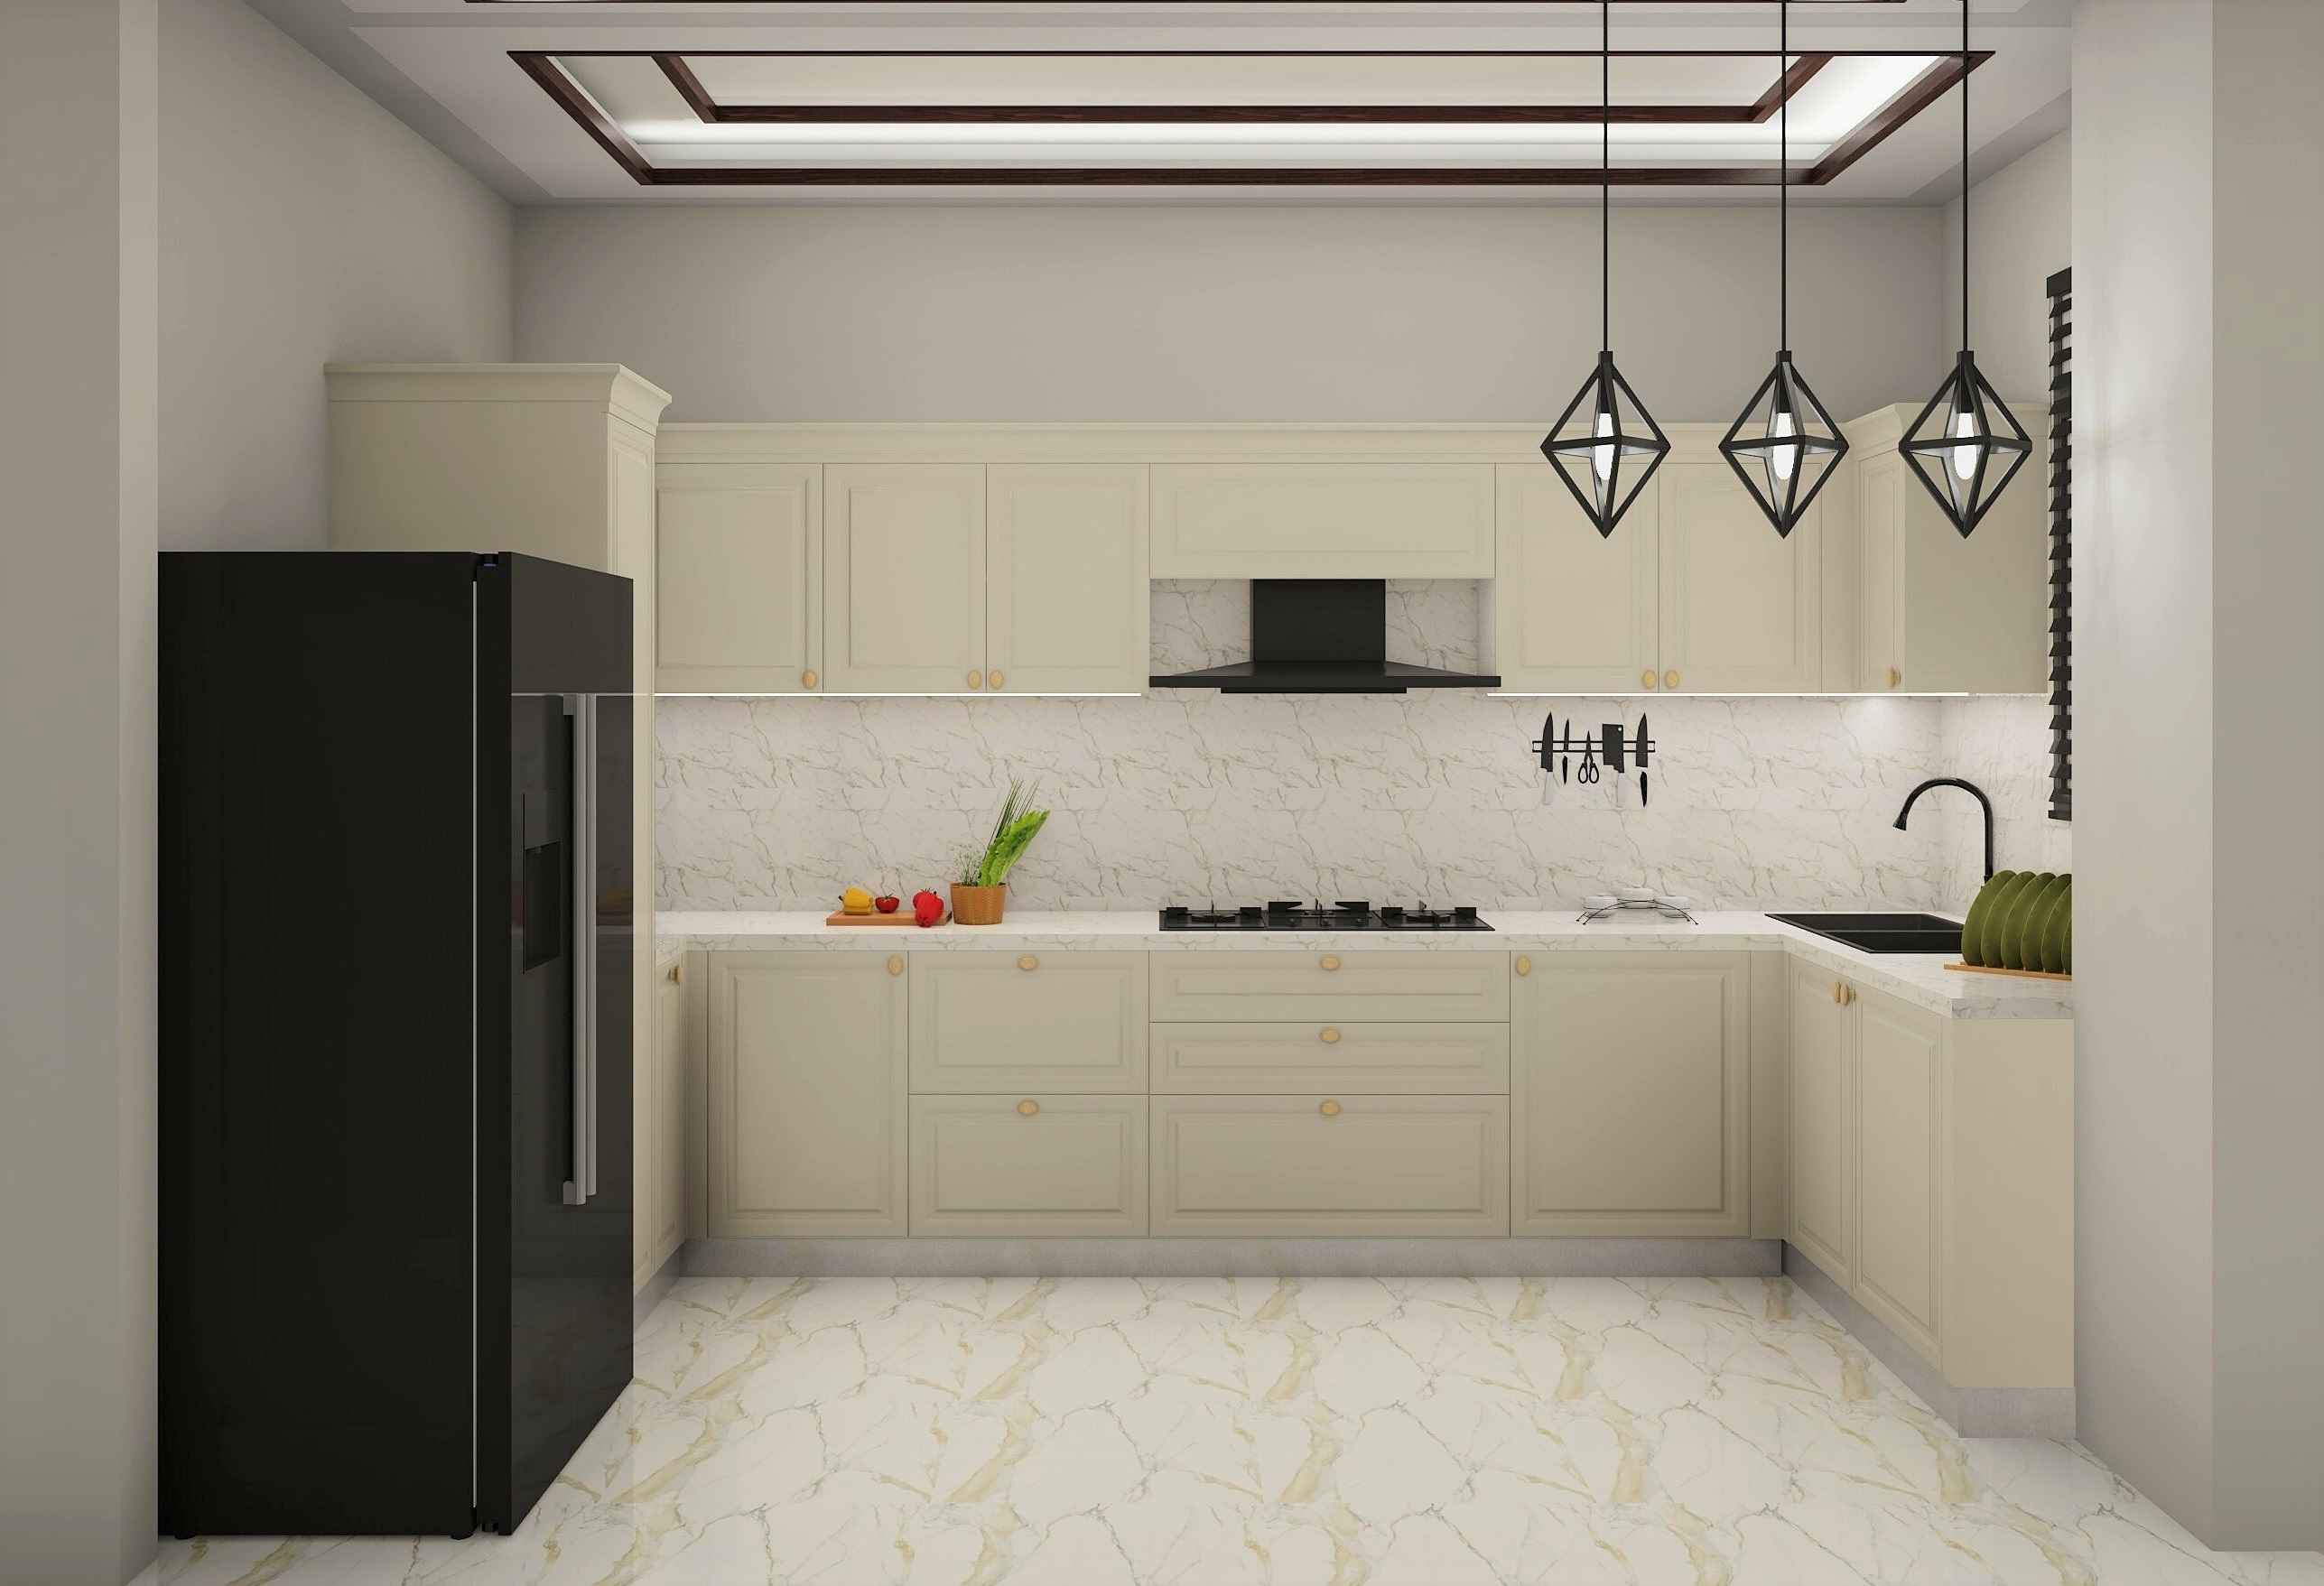 Modular G Shaped Kitchen Design